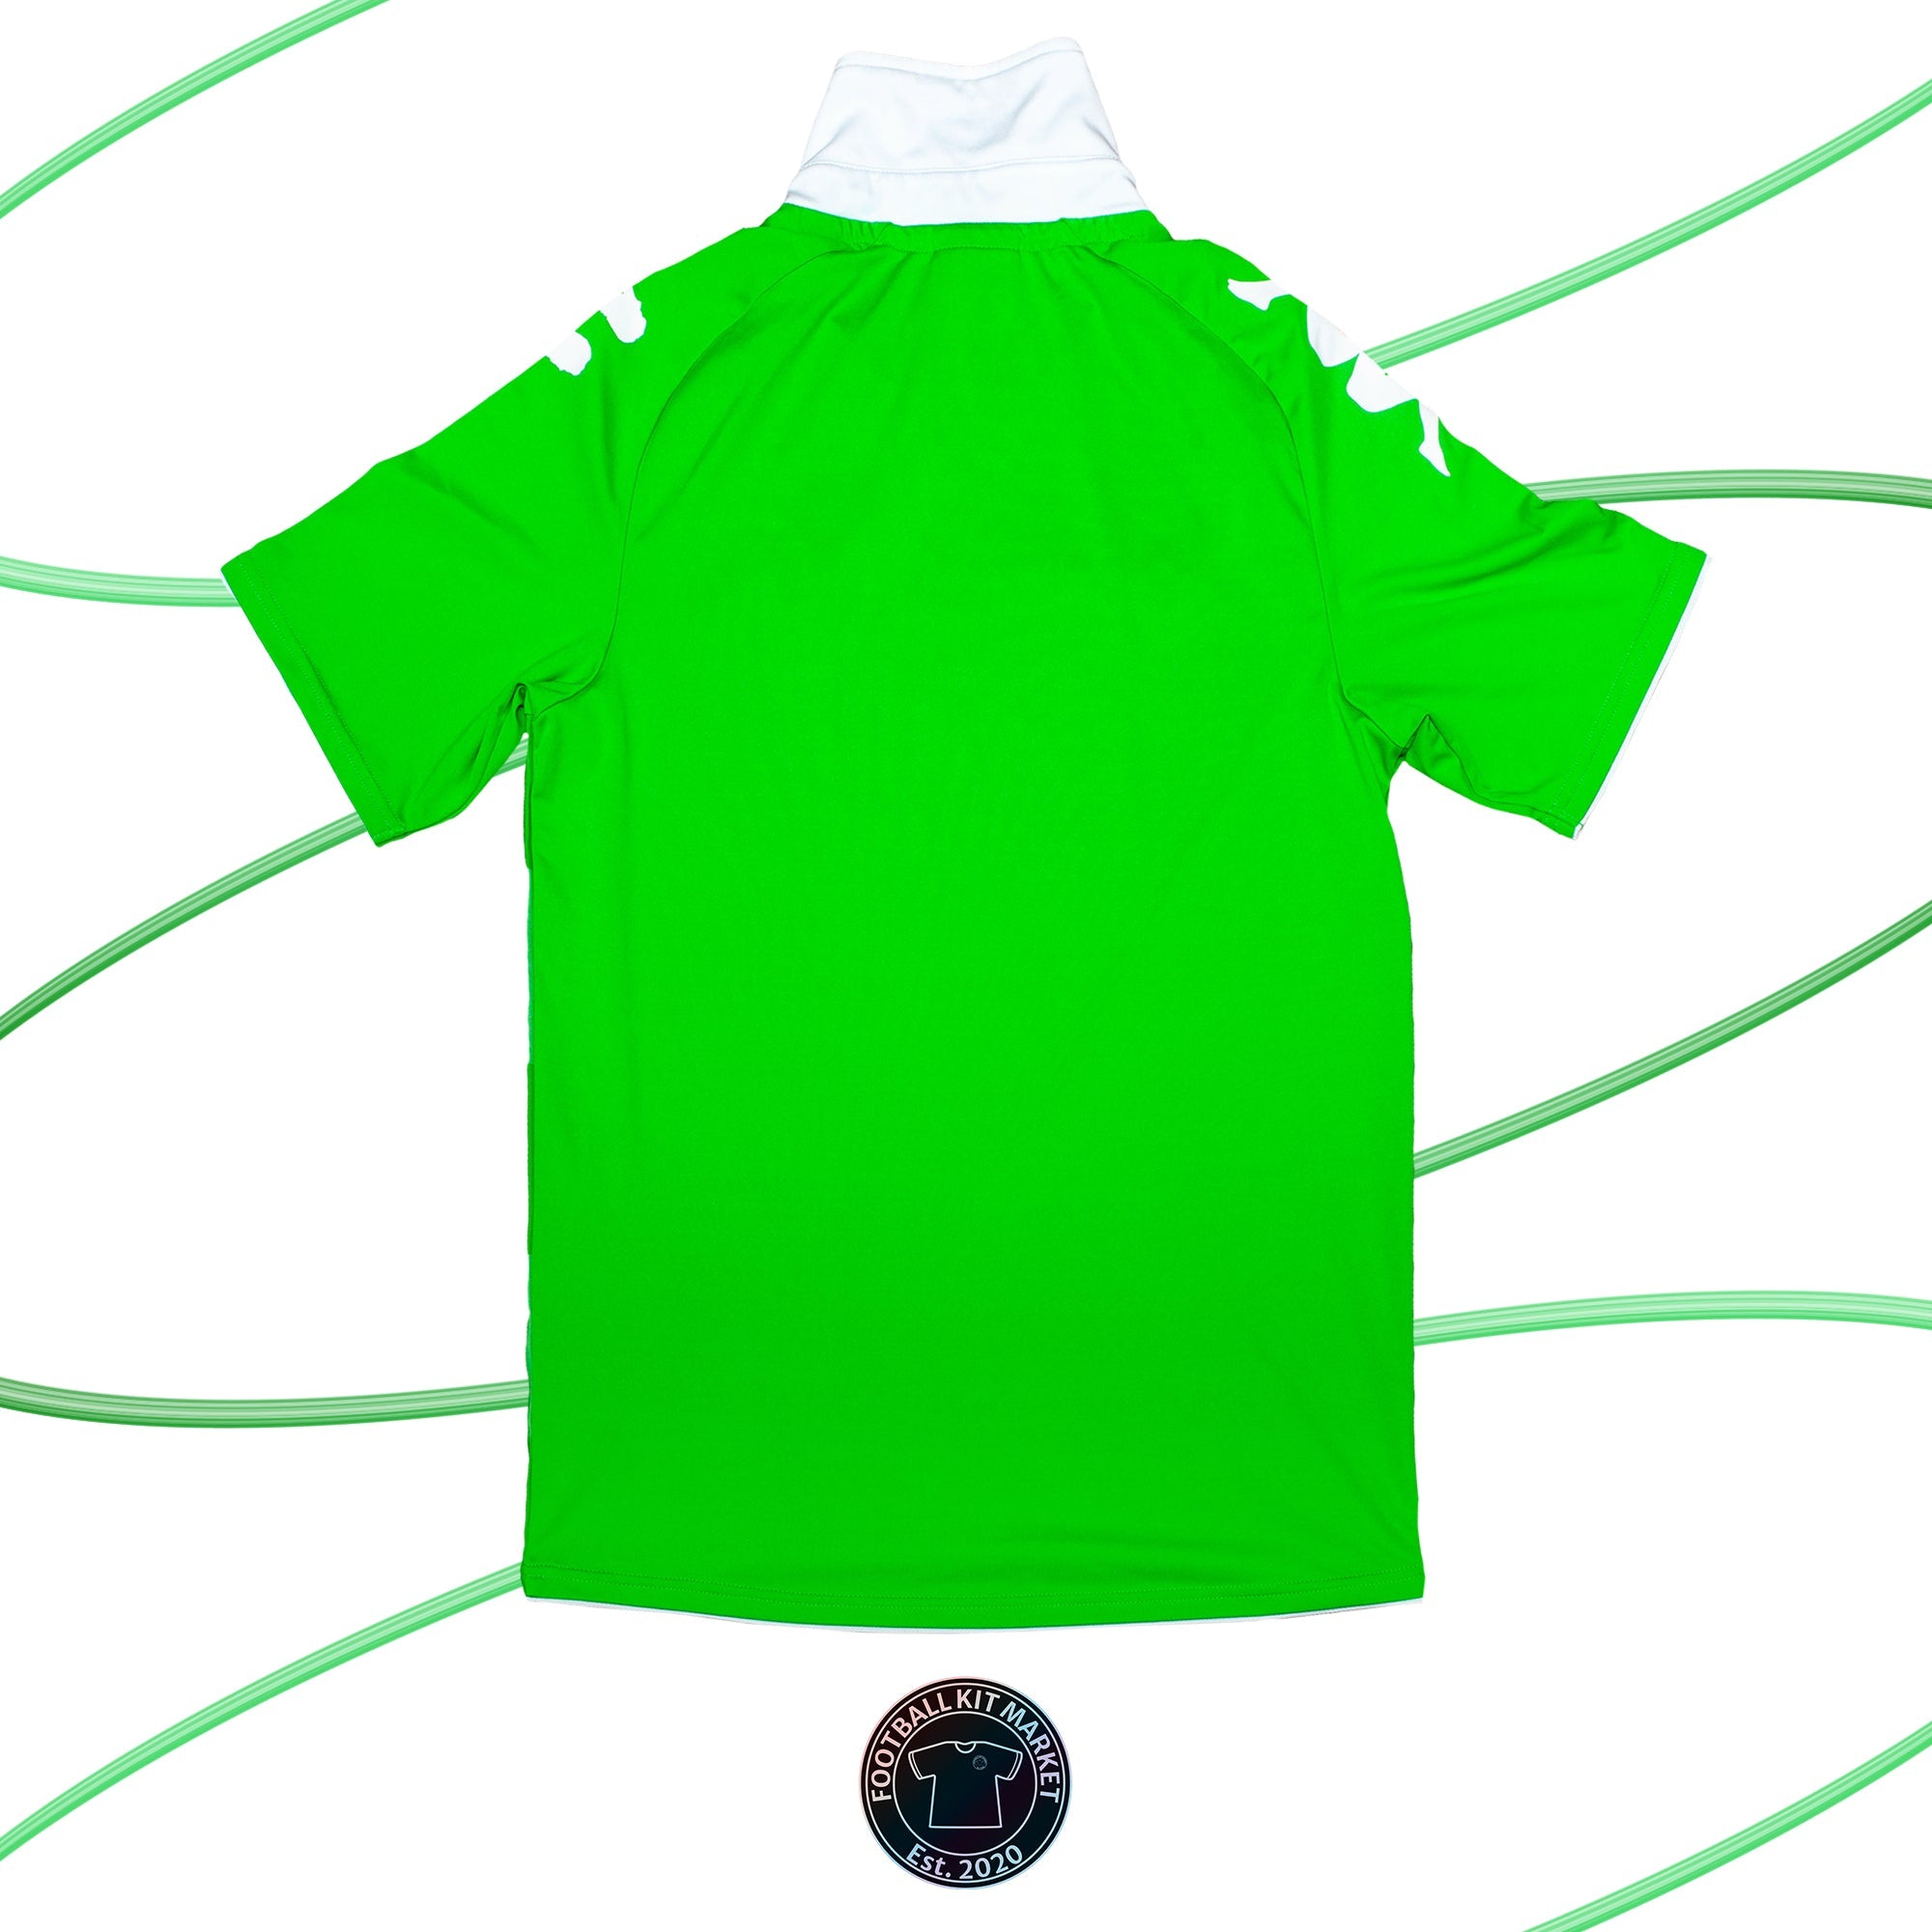 Genuine BORUSSIA MONCHENGLADBACH Away Shirt (2013-2014) - KAPPA (M) - Product Image from Football Kit Market